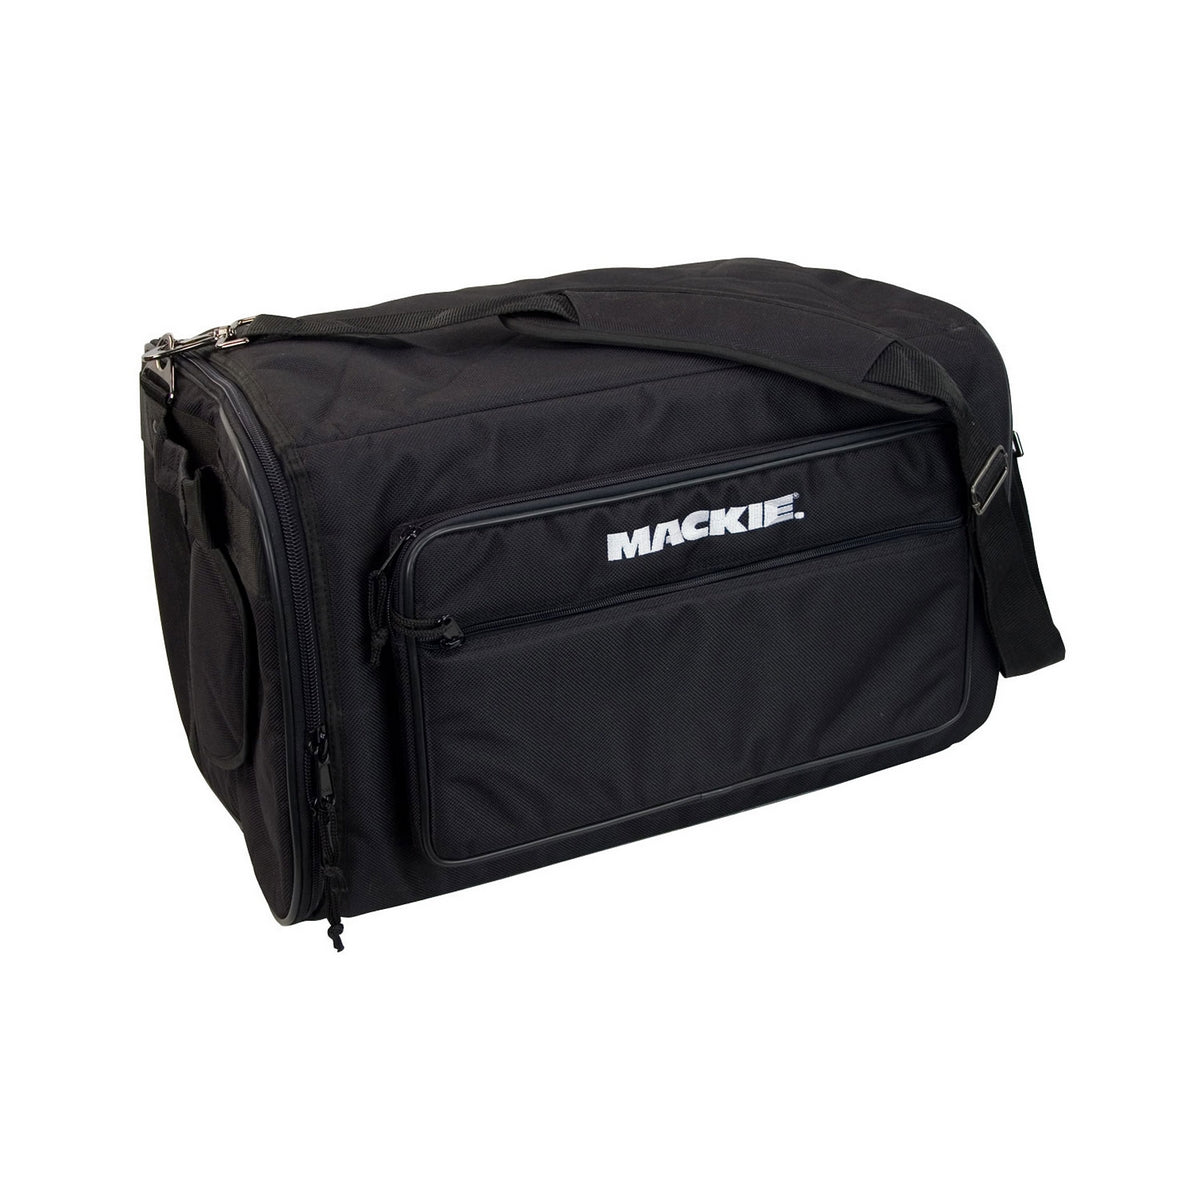 Mackie Powered Mixer Bag | Mixer Bag for PPM608 & PPM1008